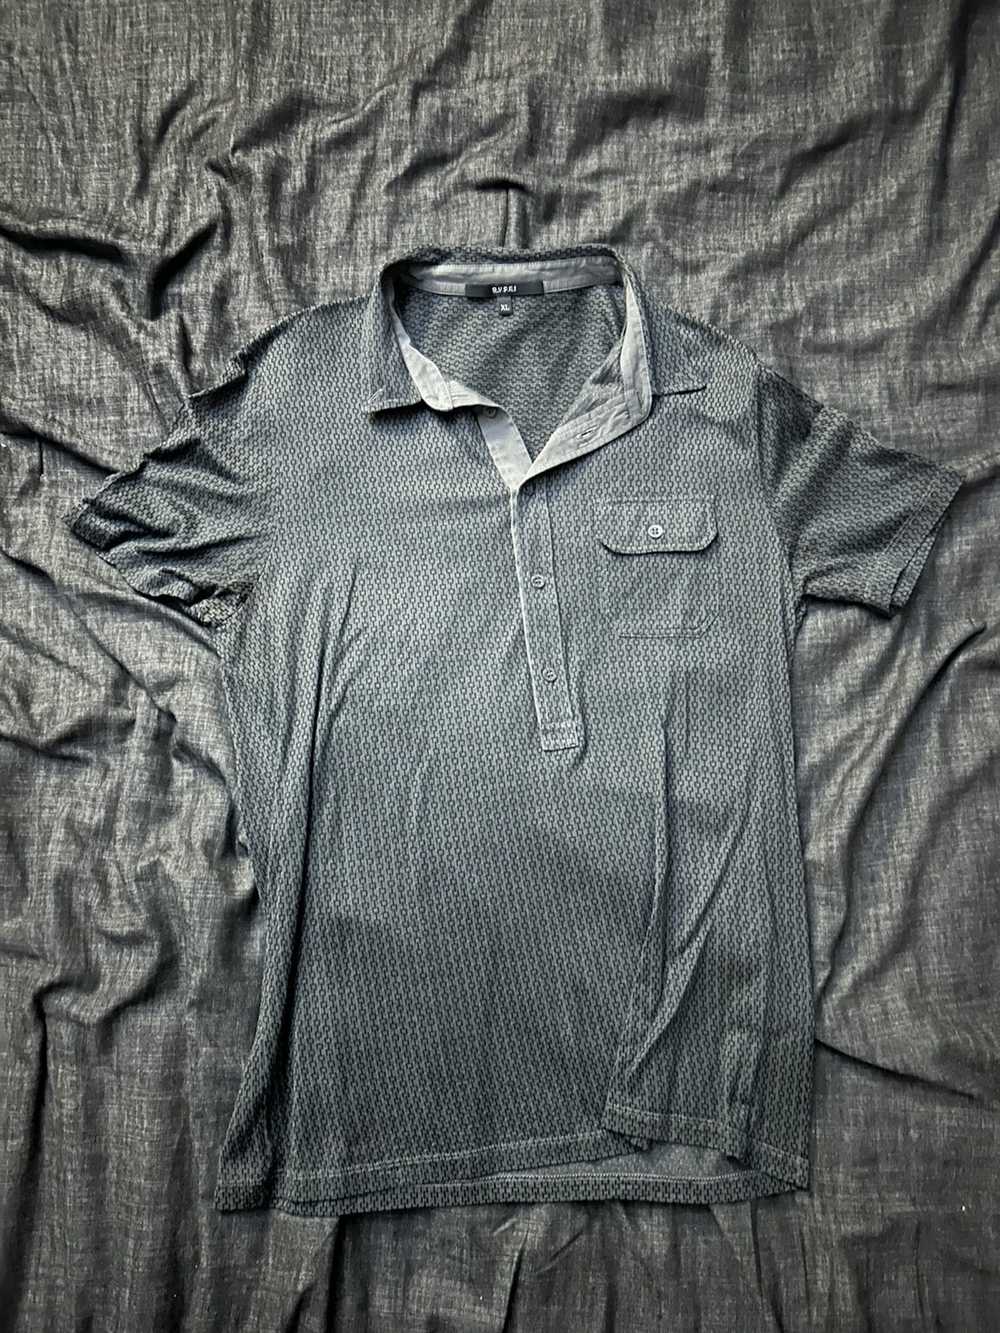 Gucci Black and Grey Gucci Collar Polo Shirt - image 1